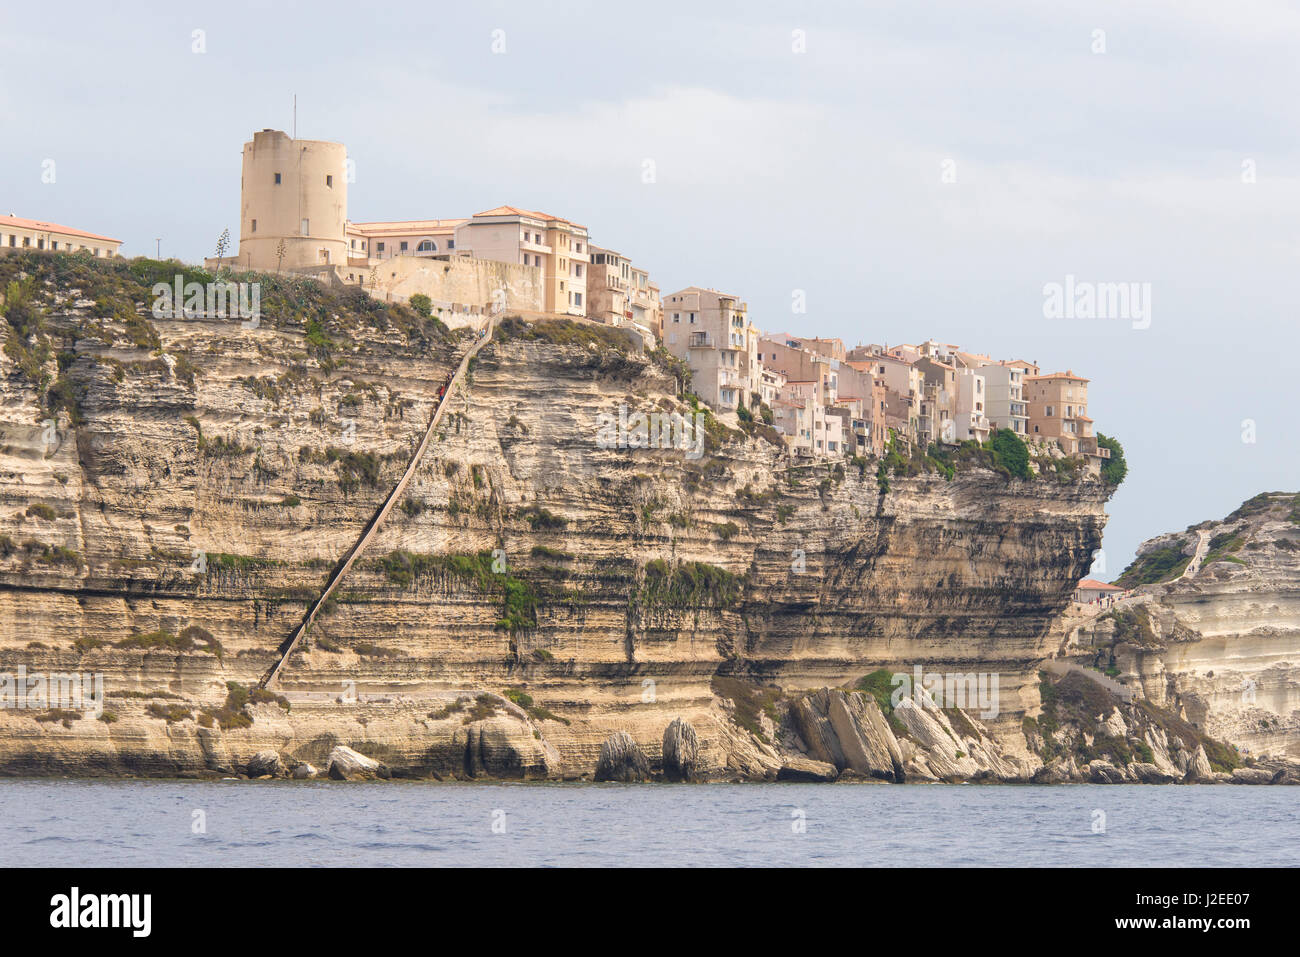 France, Corsica, Bonifacio. Dramatic limestone cliffs with precarious seeming buildings. King of Aragon stairway (Escalier du Roi d'Aragon) Stock Photo